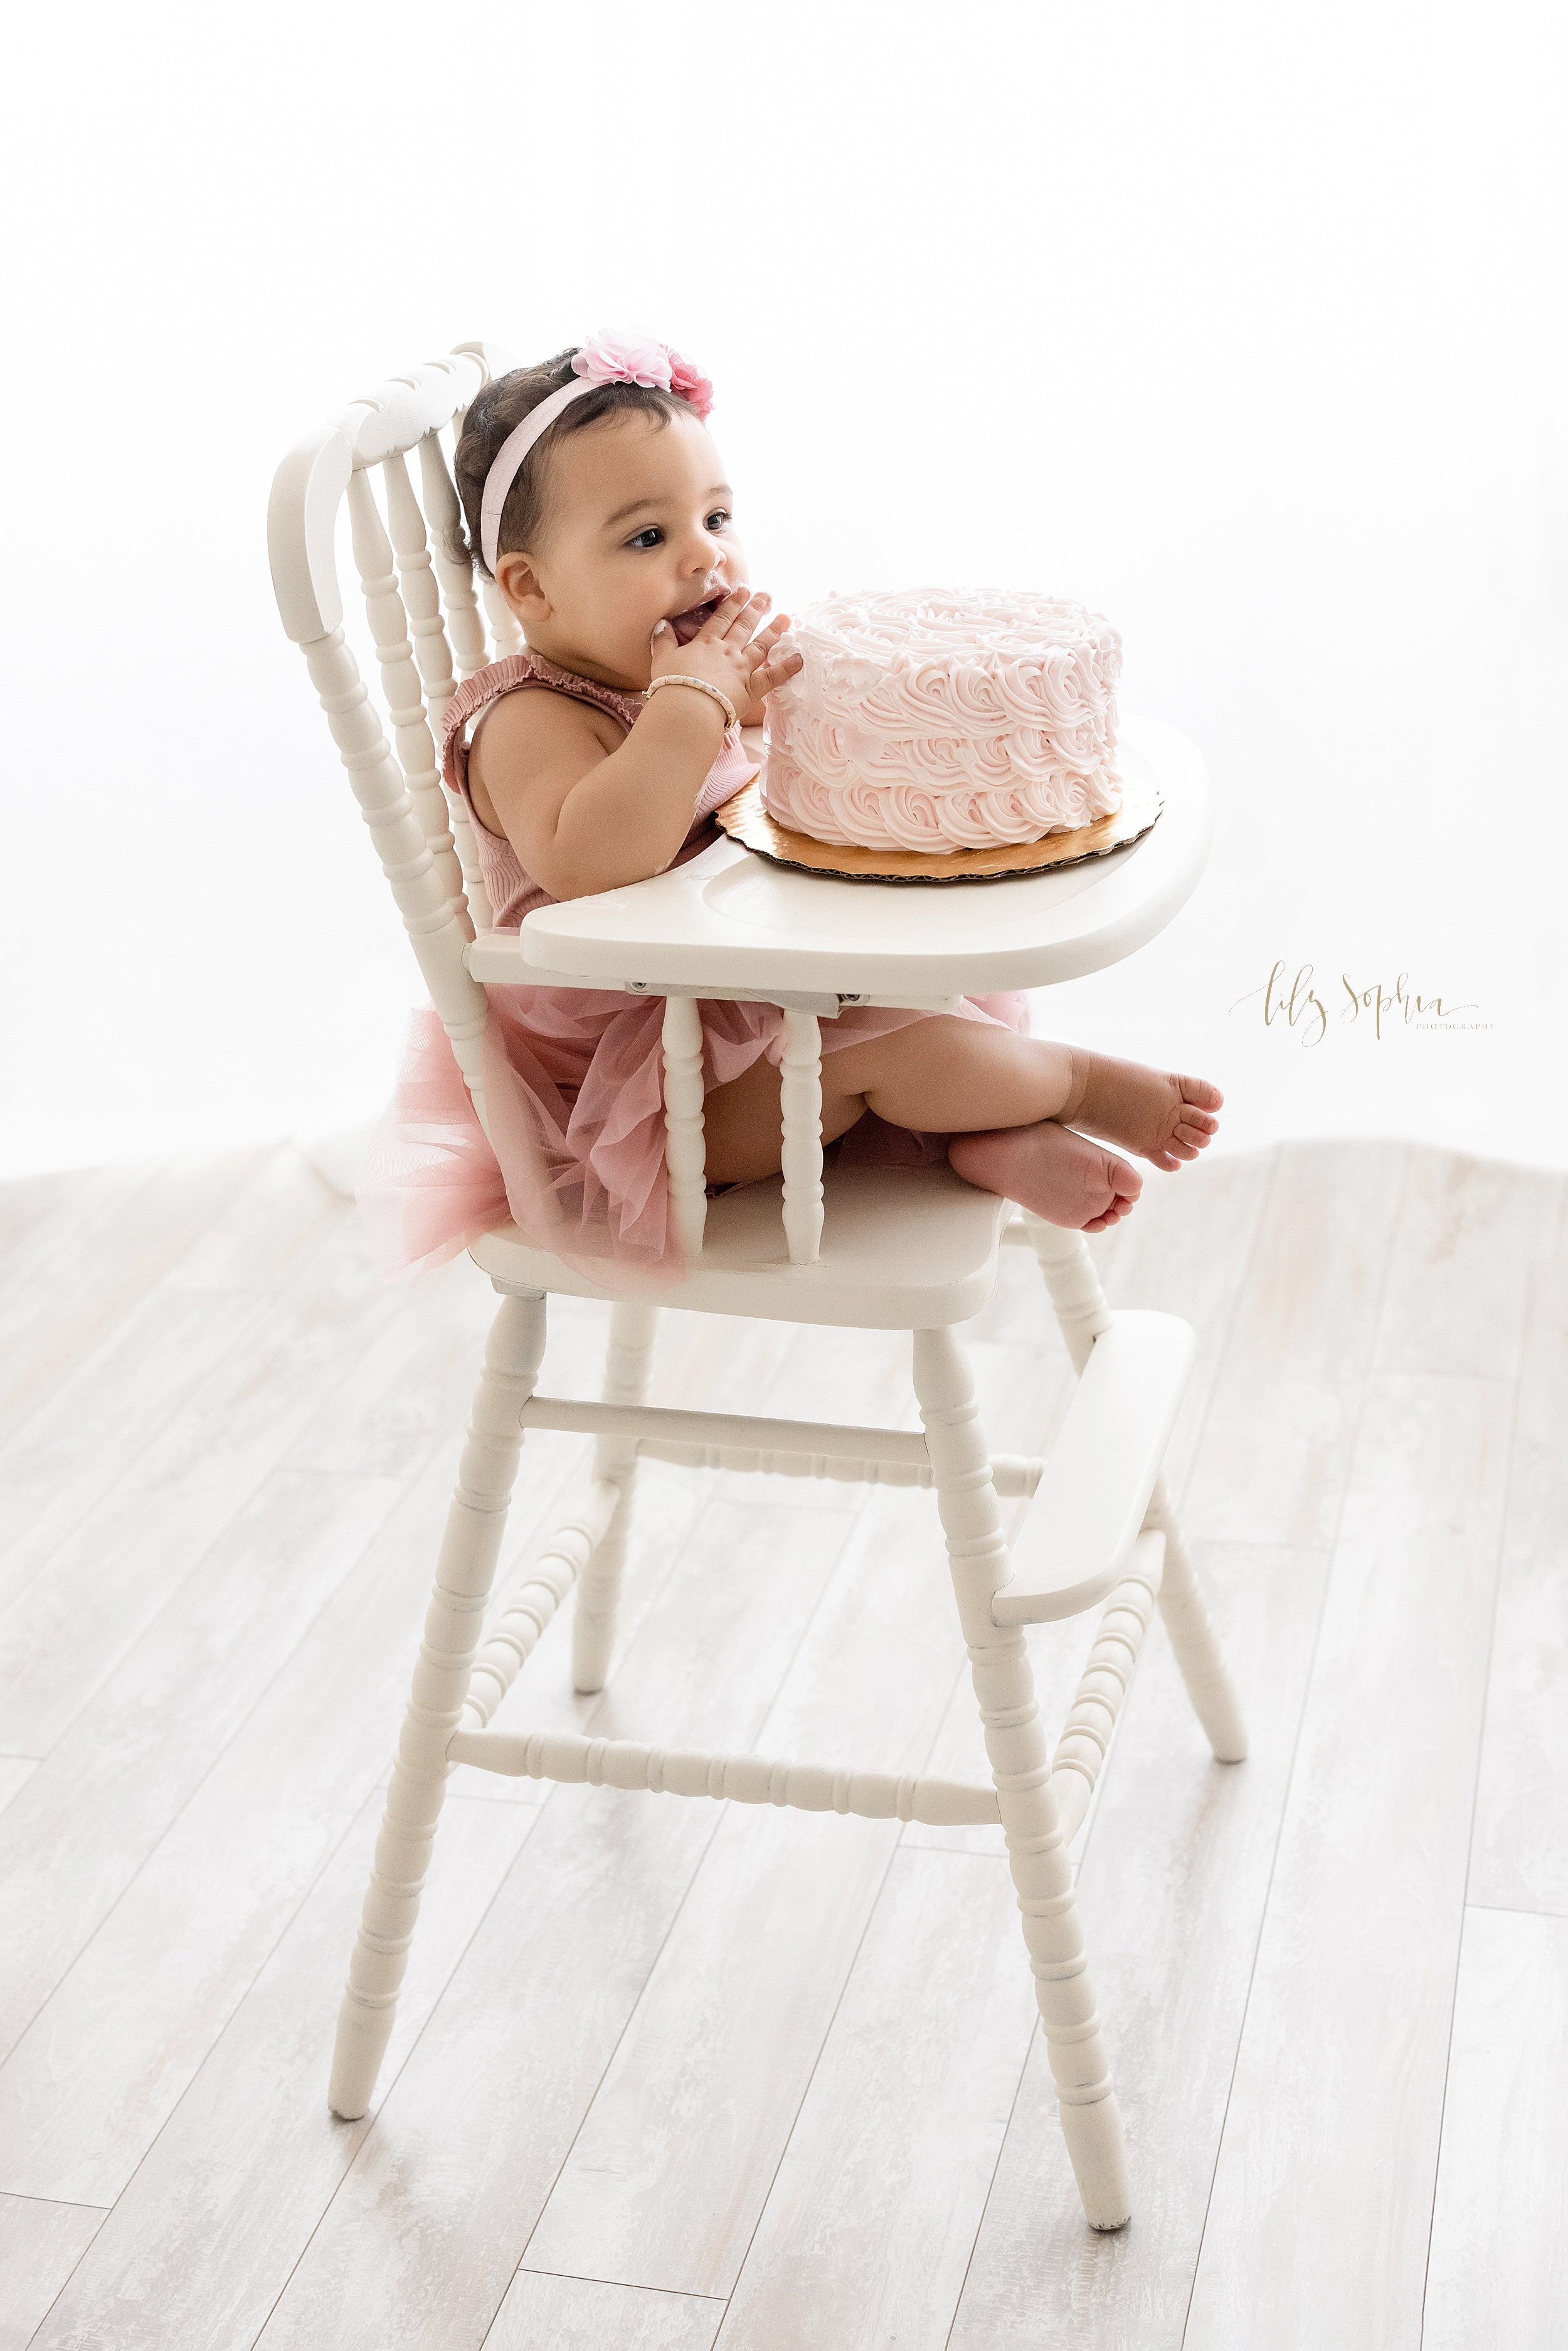 intown-atlanta-grant-park-decatur-oakhurst-marietta-dutch-family-baby-girl-first-birthday-cake-smash-studio-photos_2673.jpg